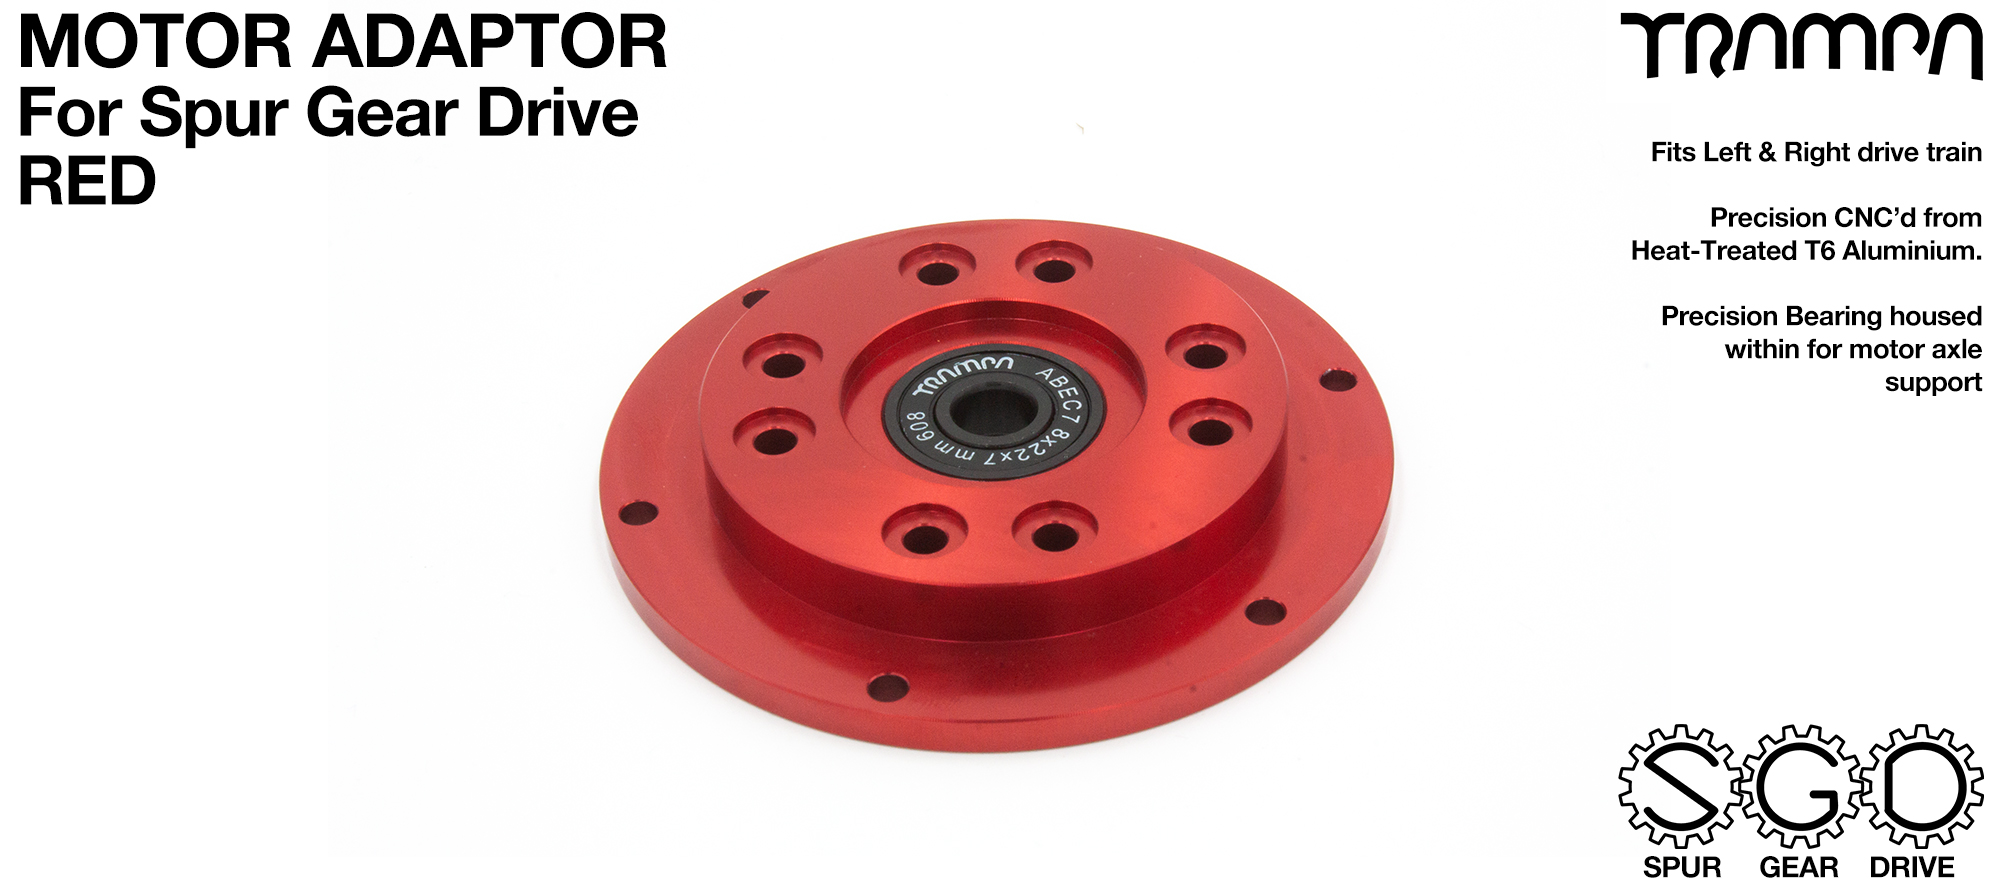 SPUR Gear Drive Motor Adaptor RED